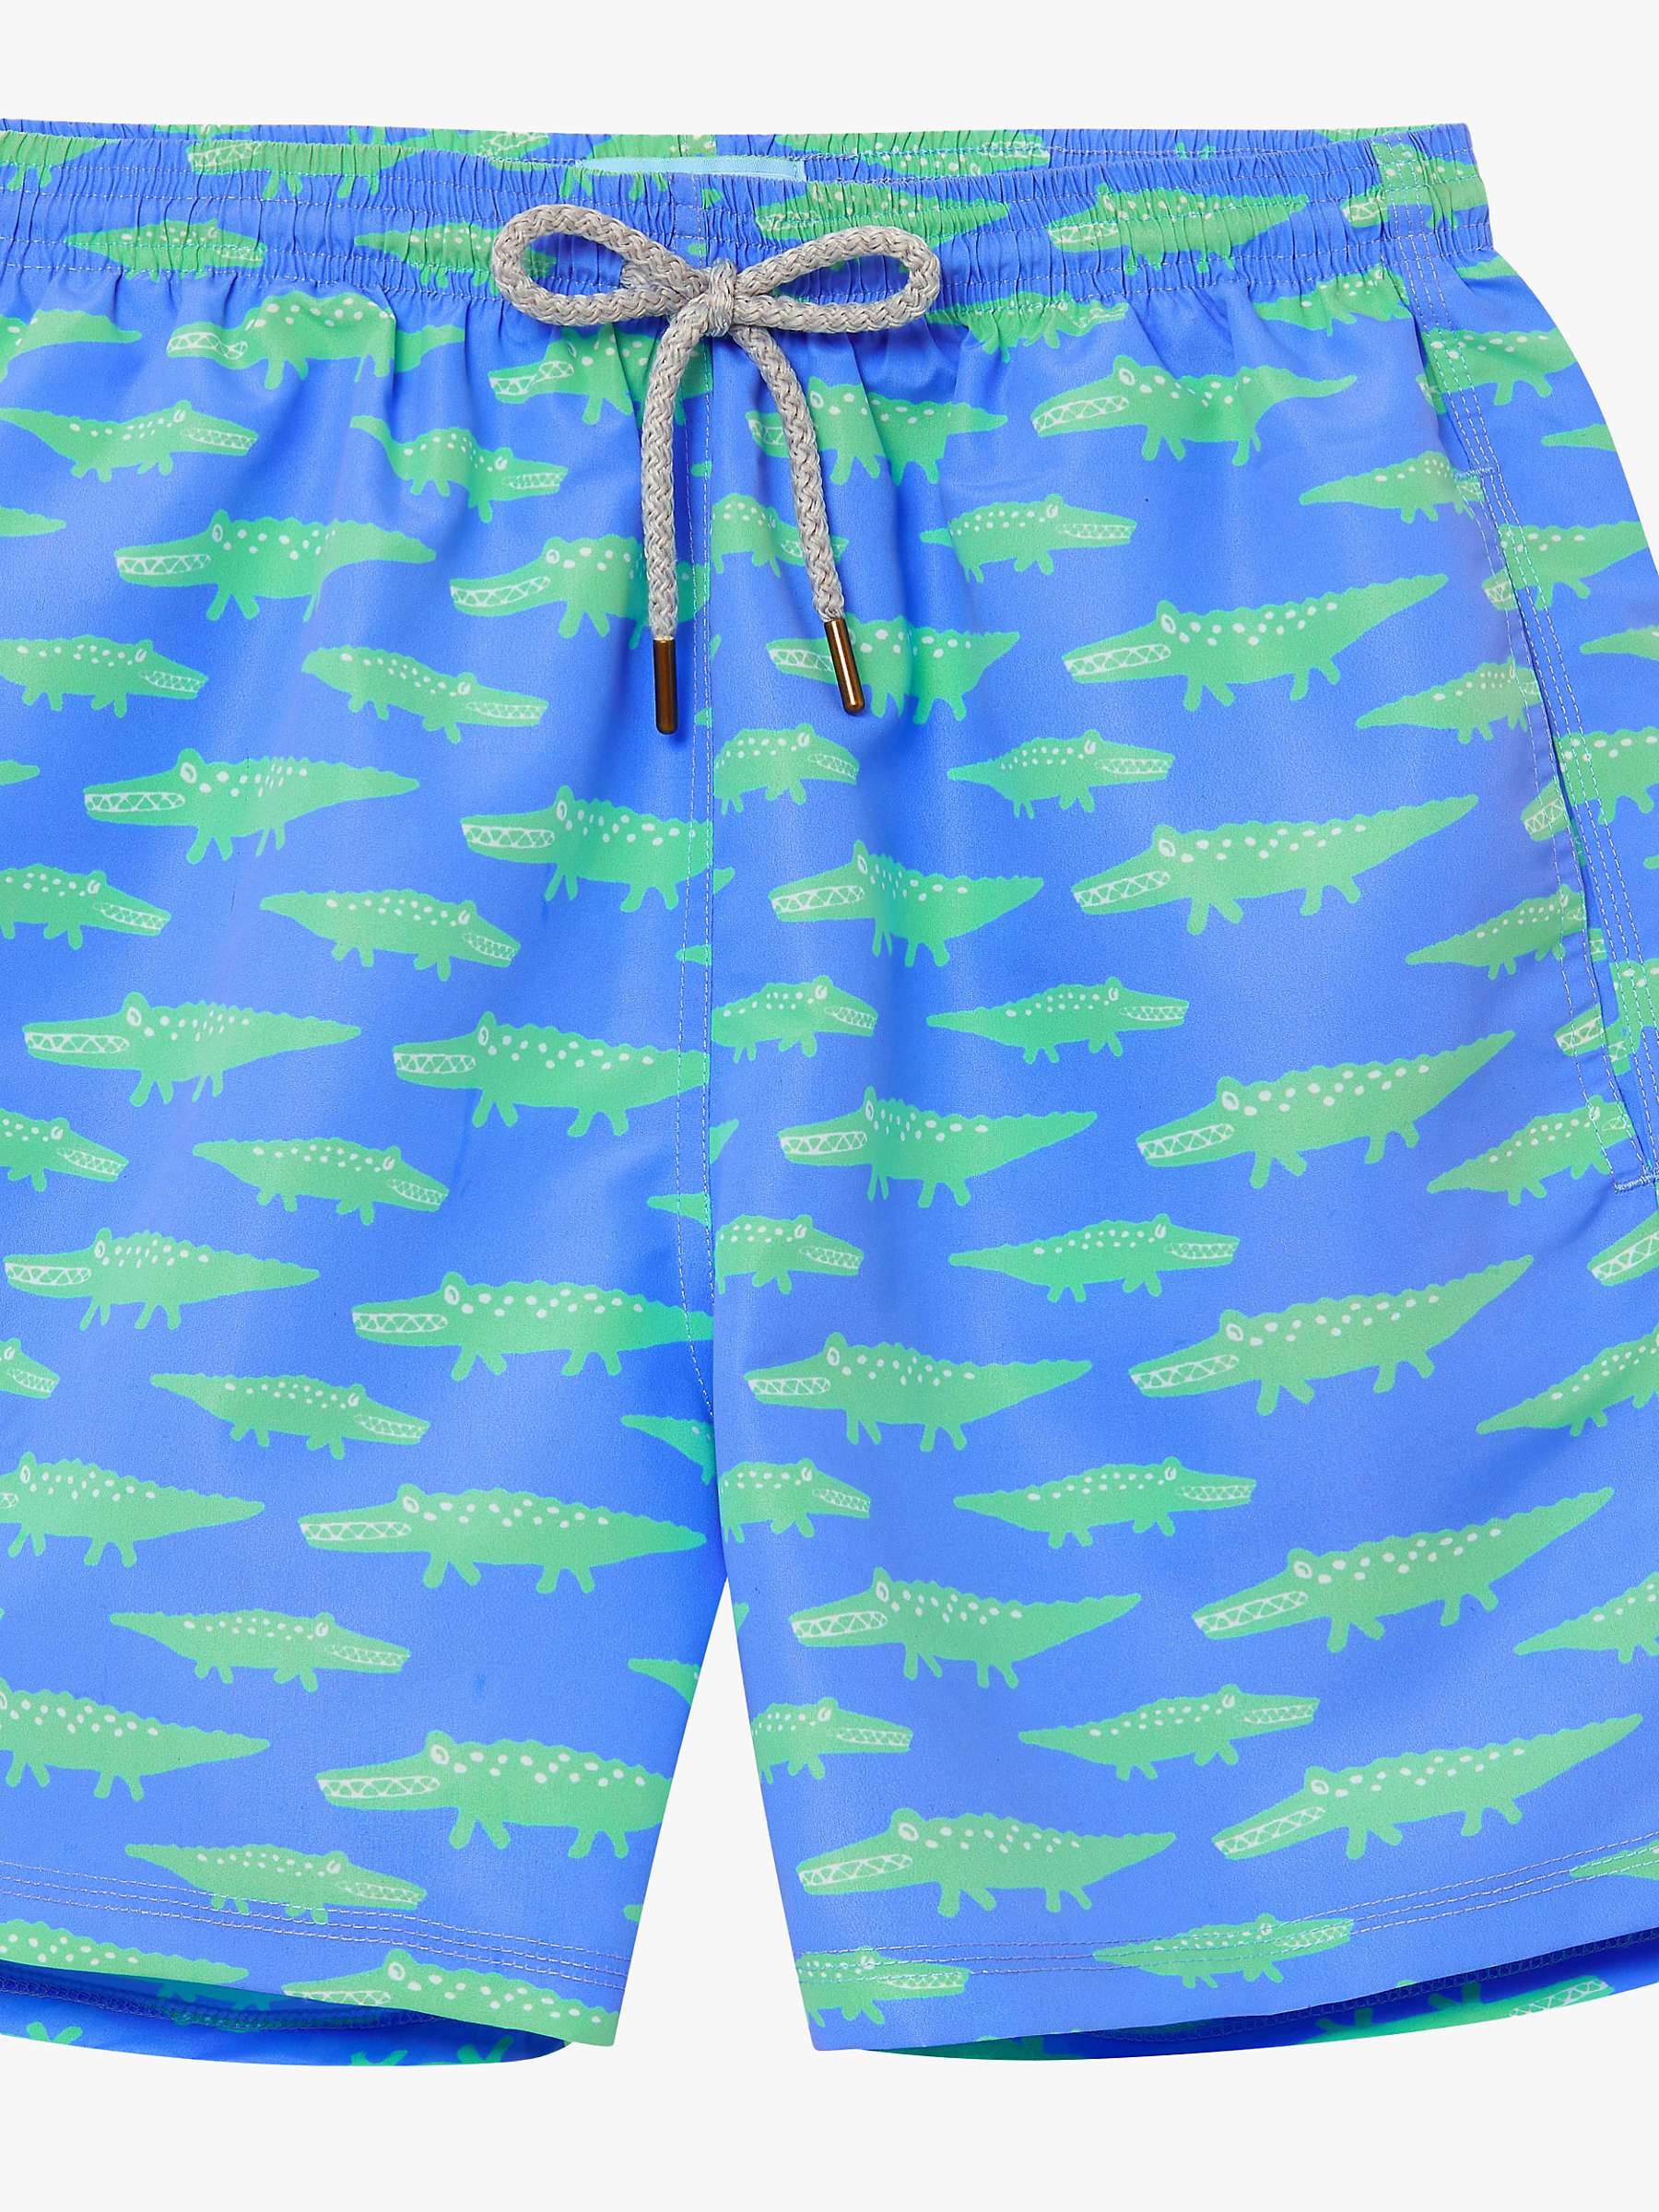 Buy Trotters Crocodile Swim Shorts, Blue Online at johnlewis.com